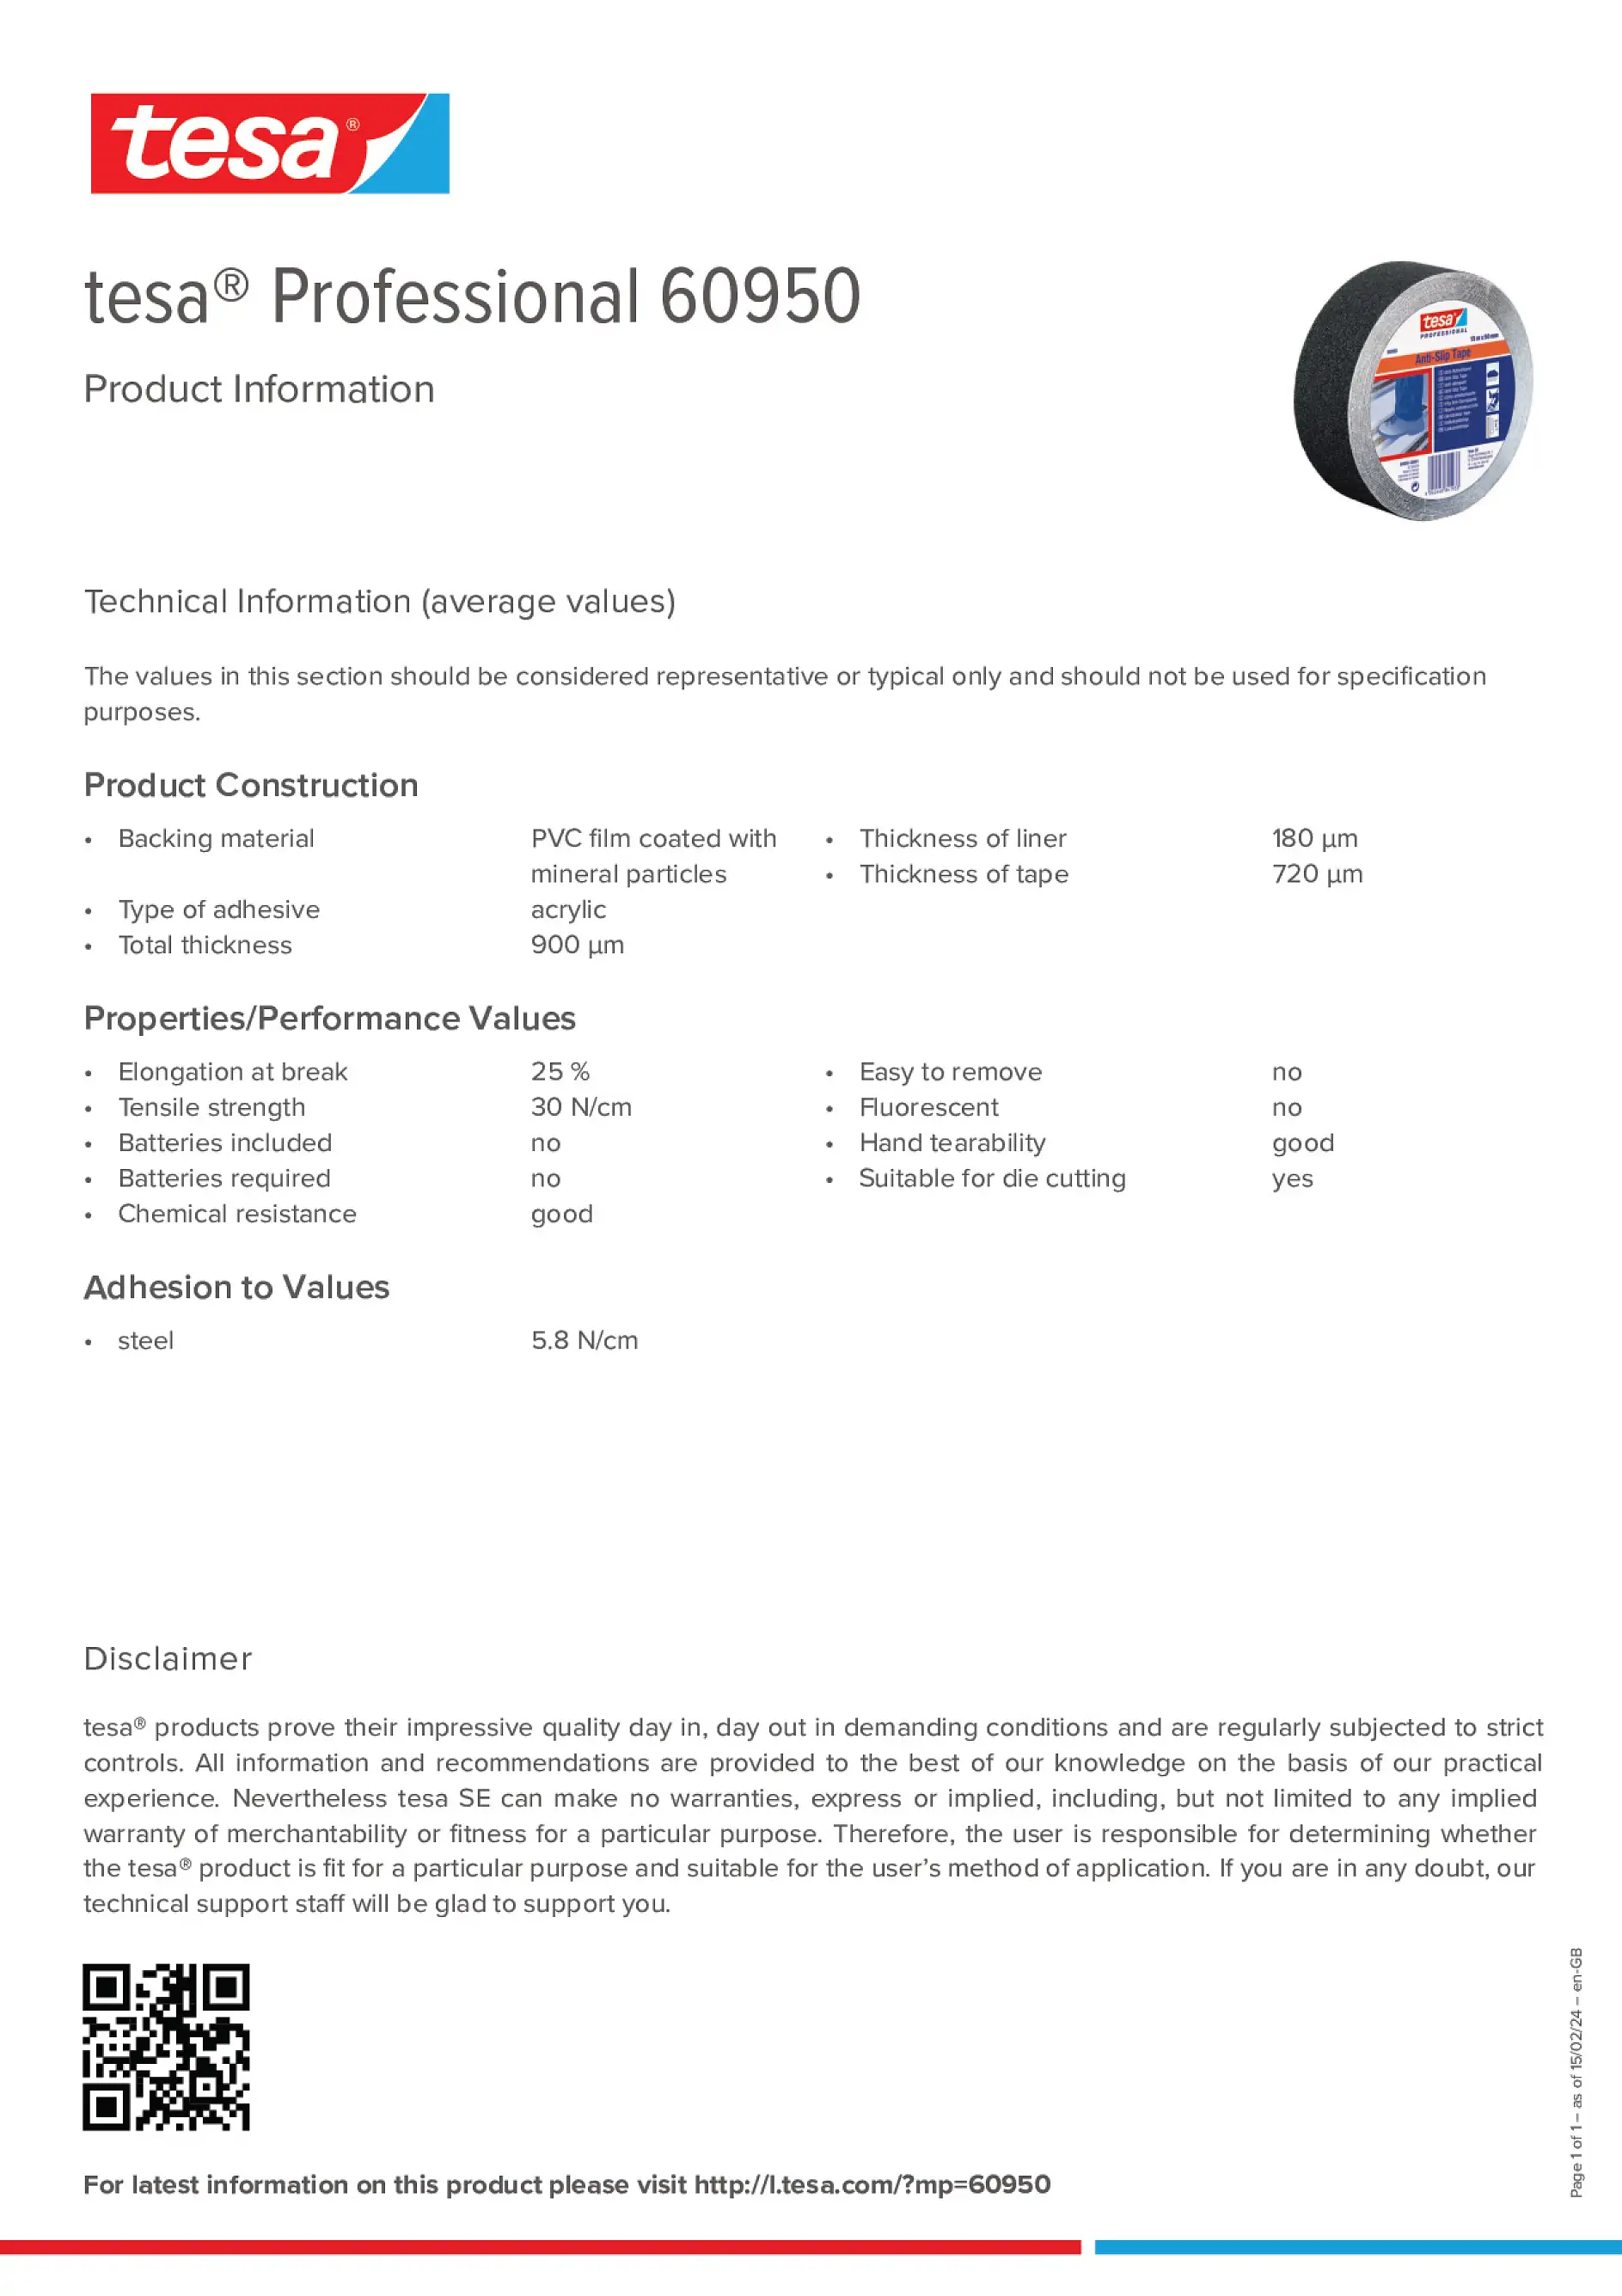 Product information_tesa® Professional 60950_en-GB